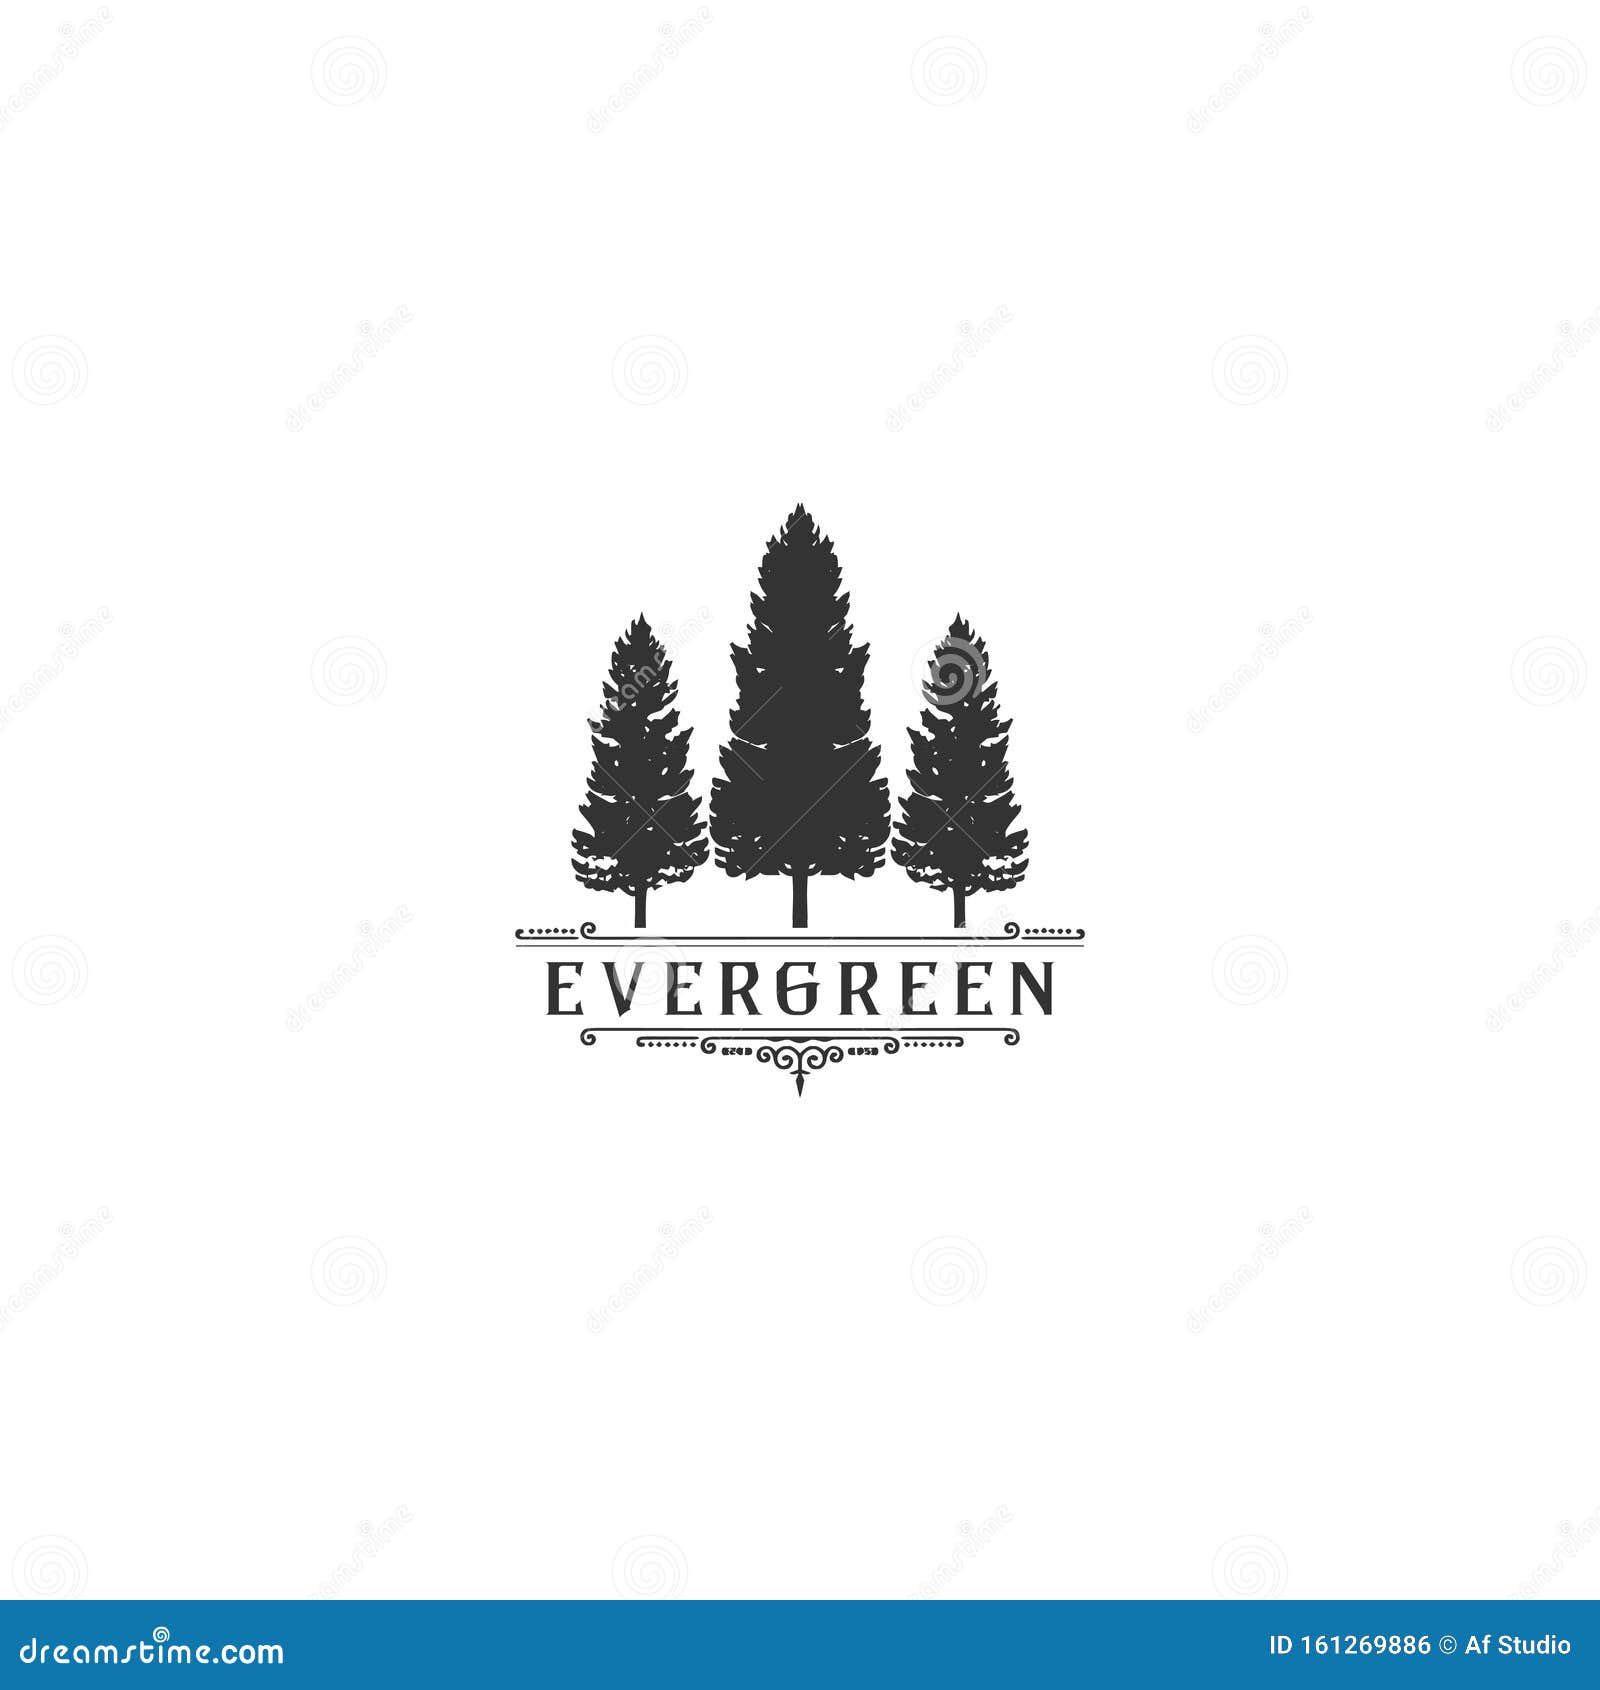 evergreen timberland logo  